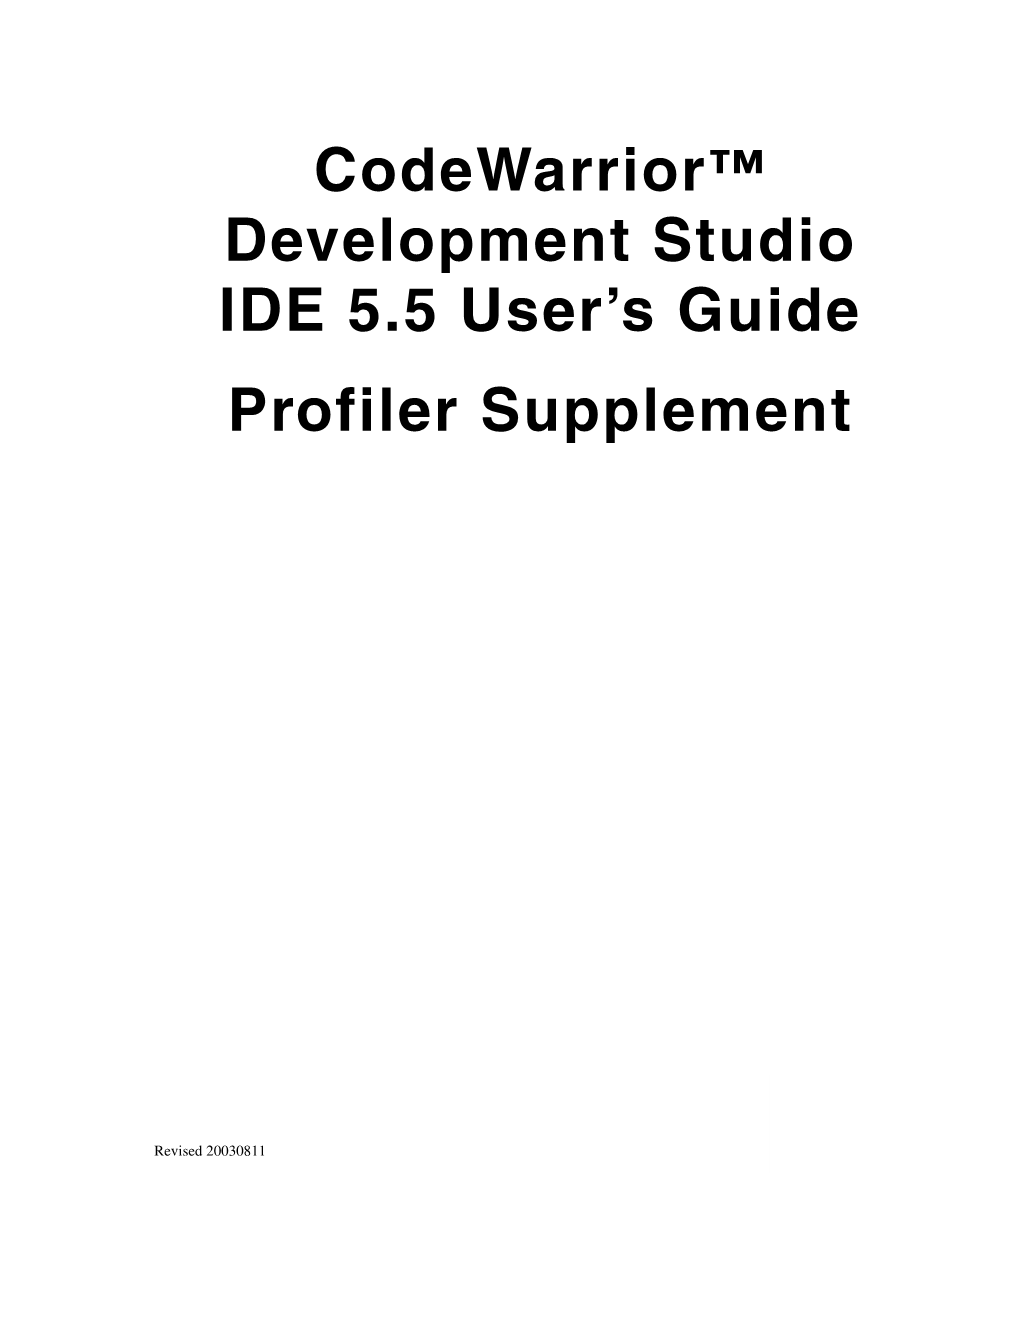 Codewarrior™ Development Studio IDE 5.5 User's Guide Profiler